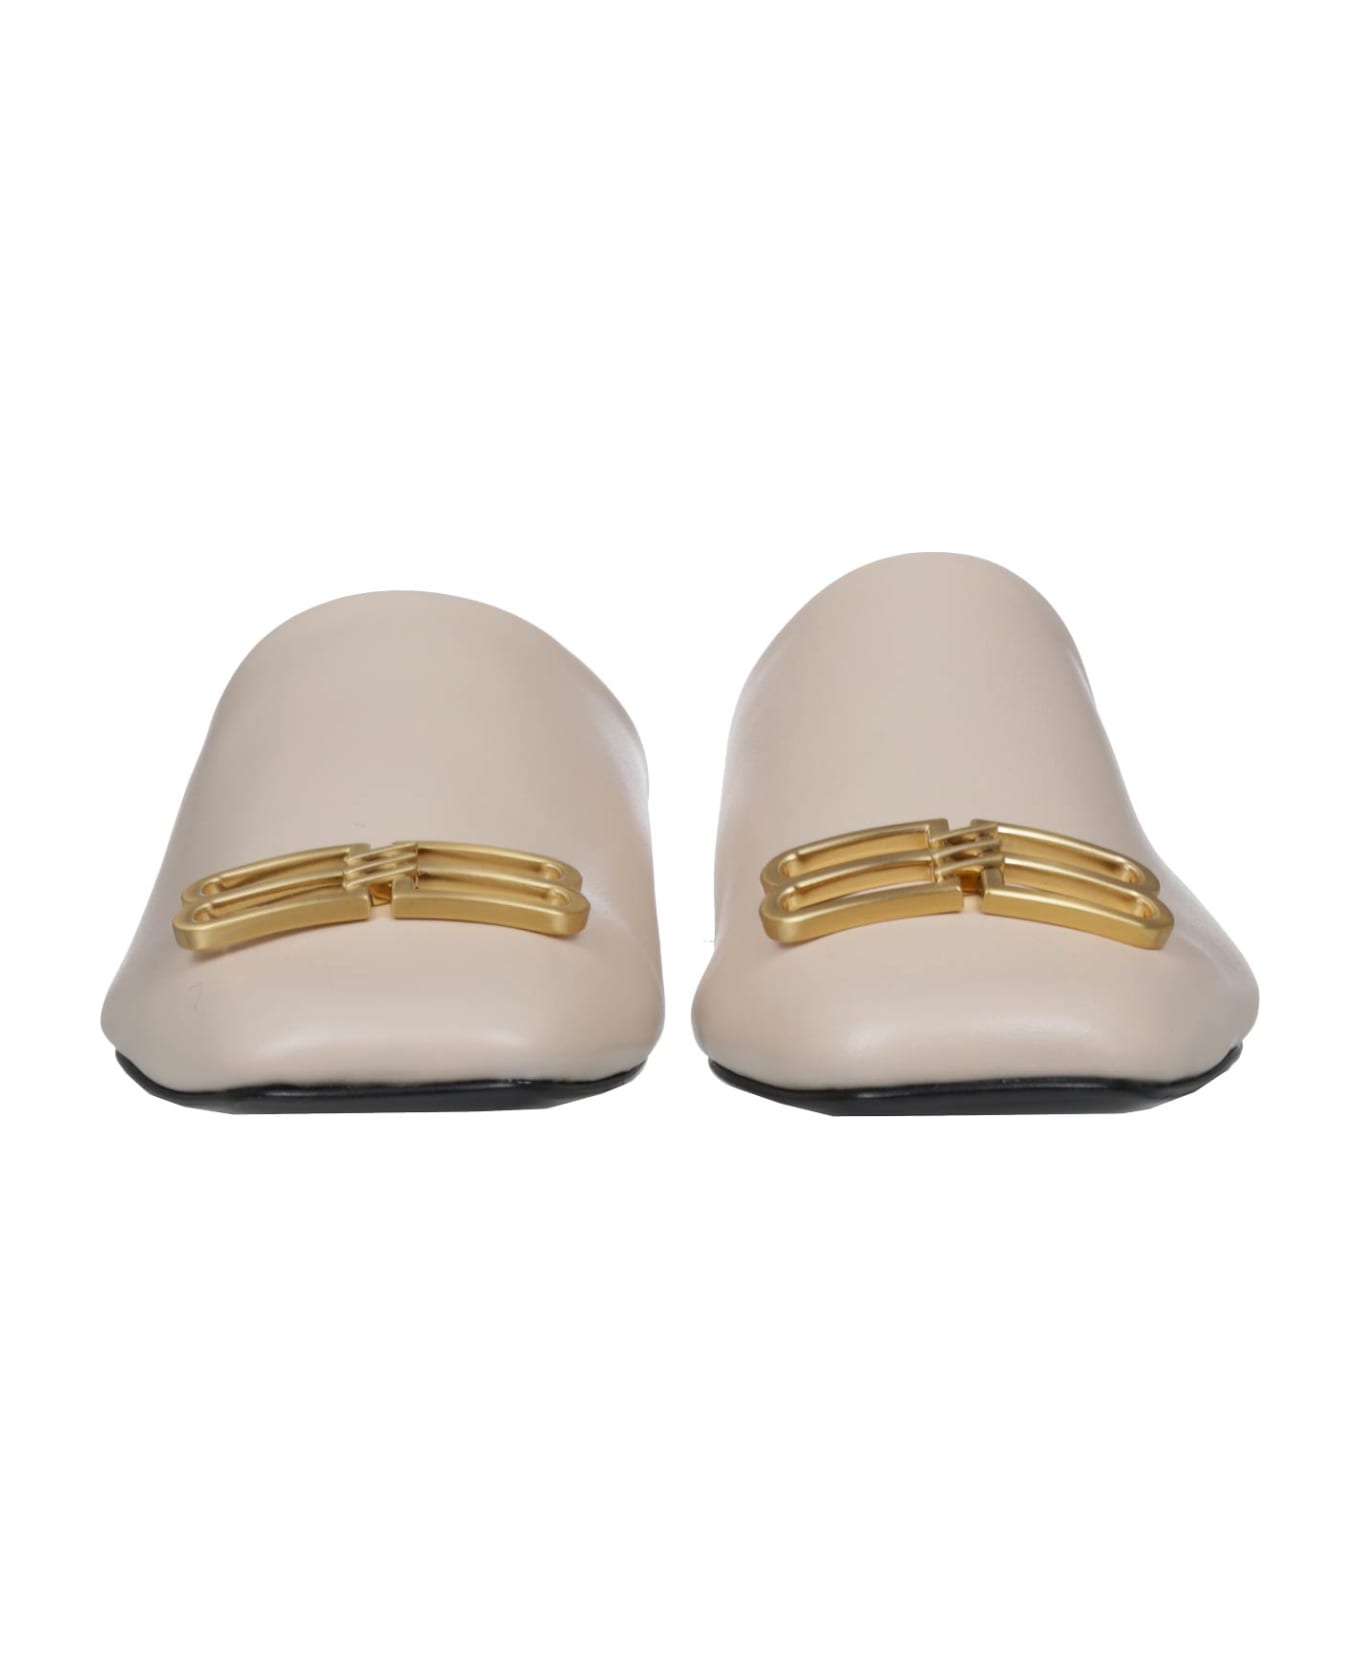 Balenciaga Beige Flat Sandals - Beige